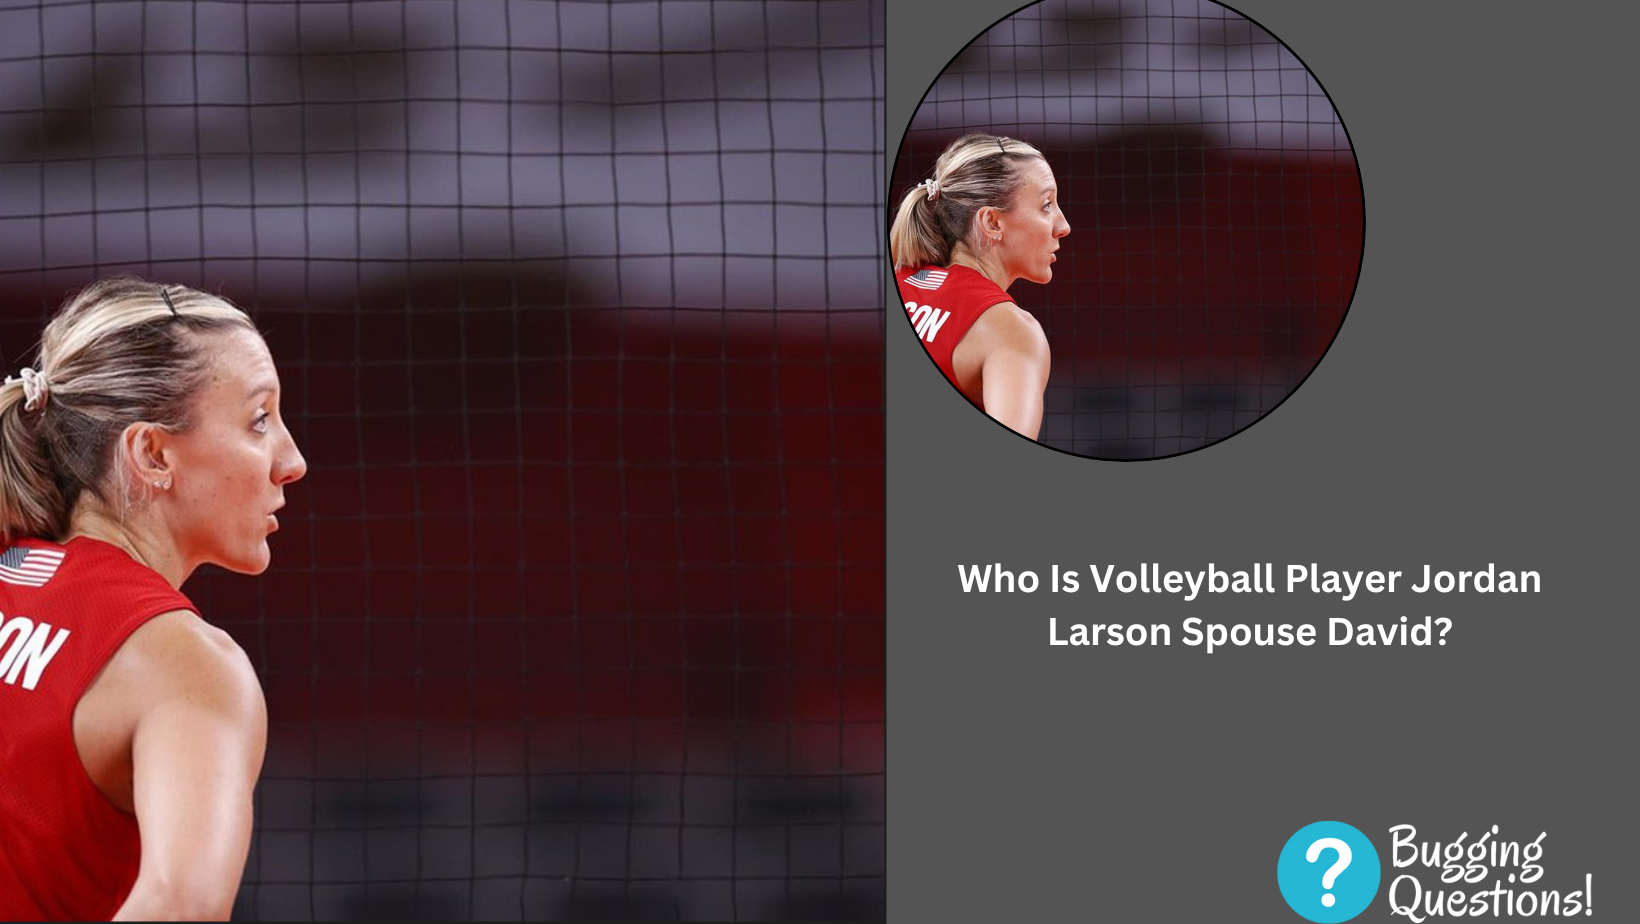 Who Is Volleyball Player Jordan Larson Spouse David?